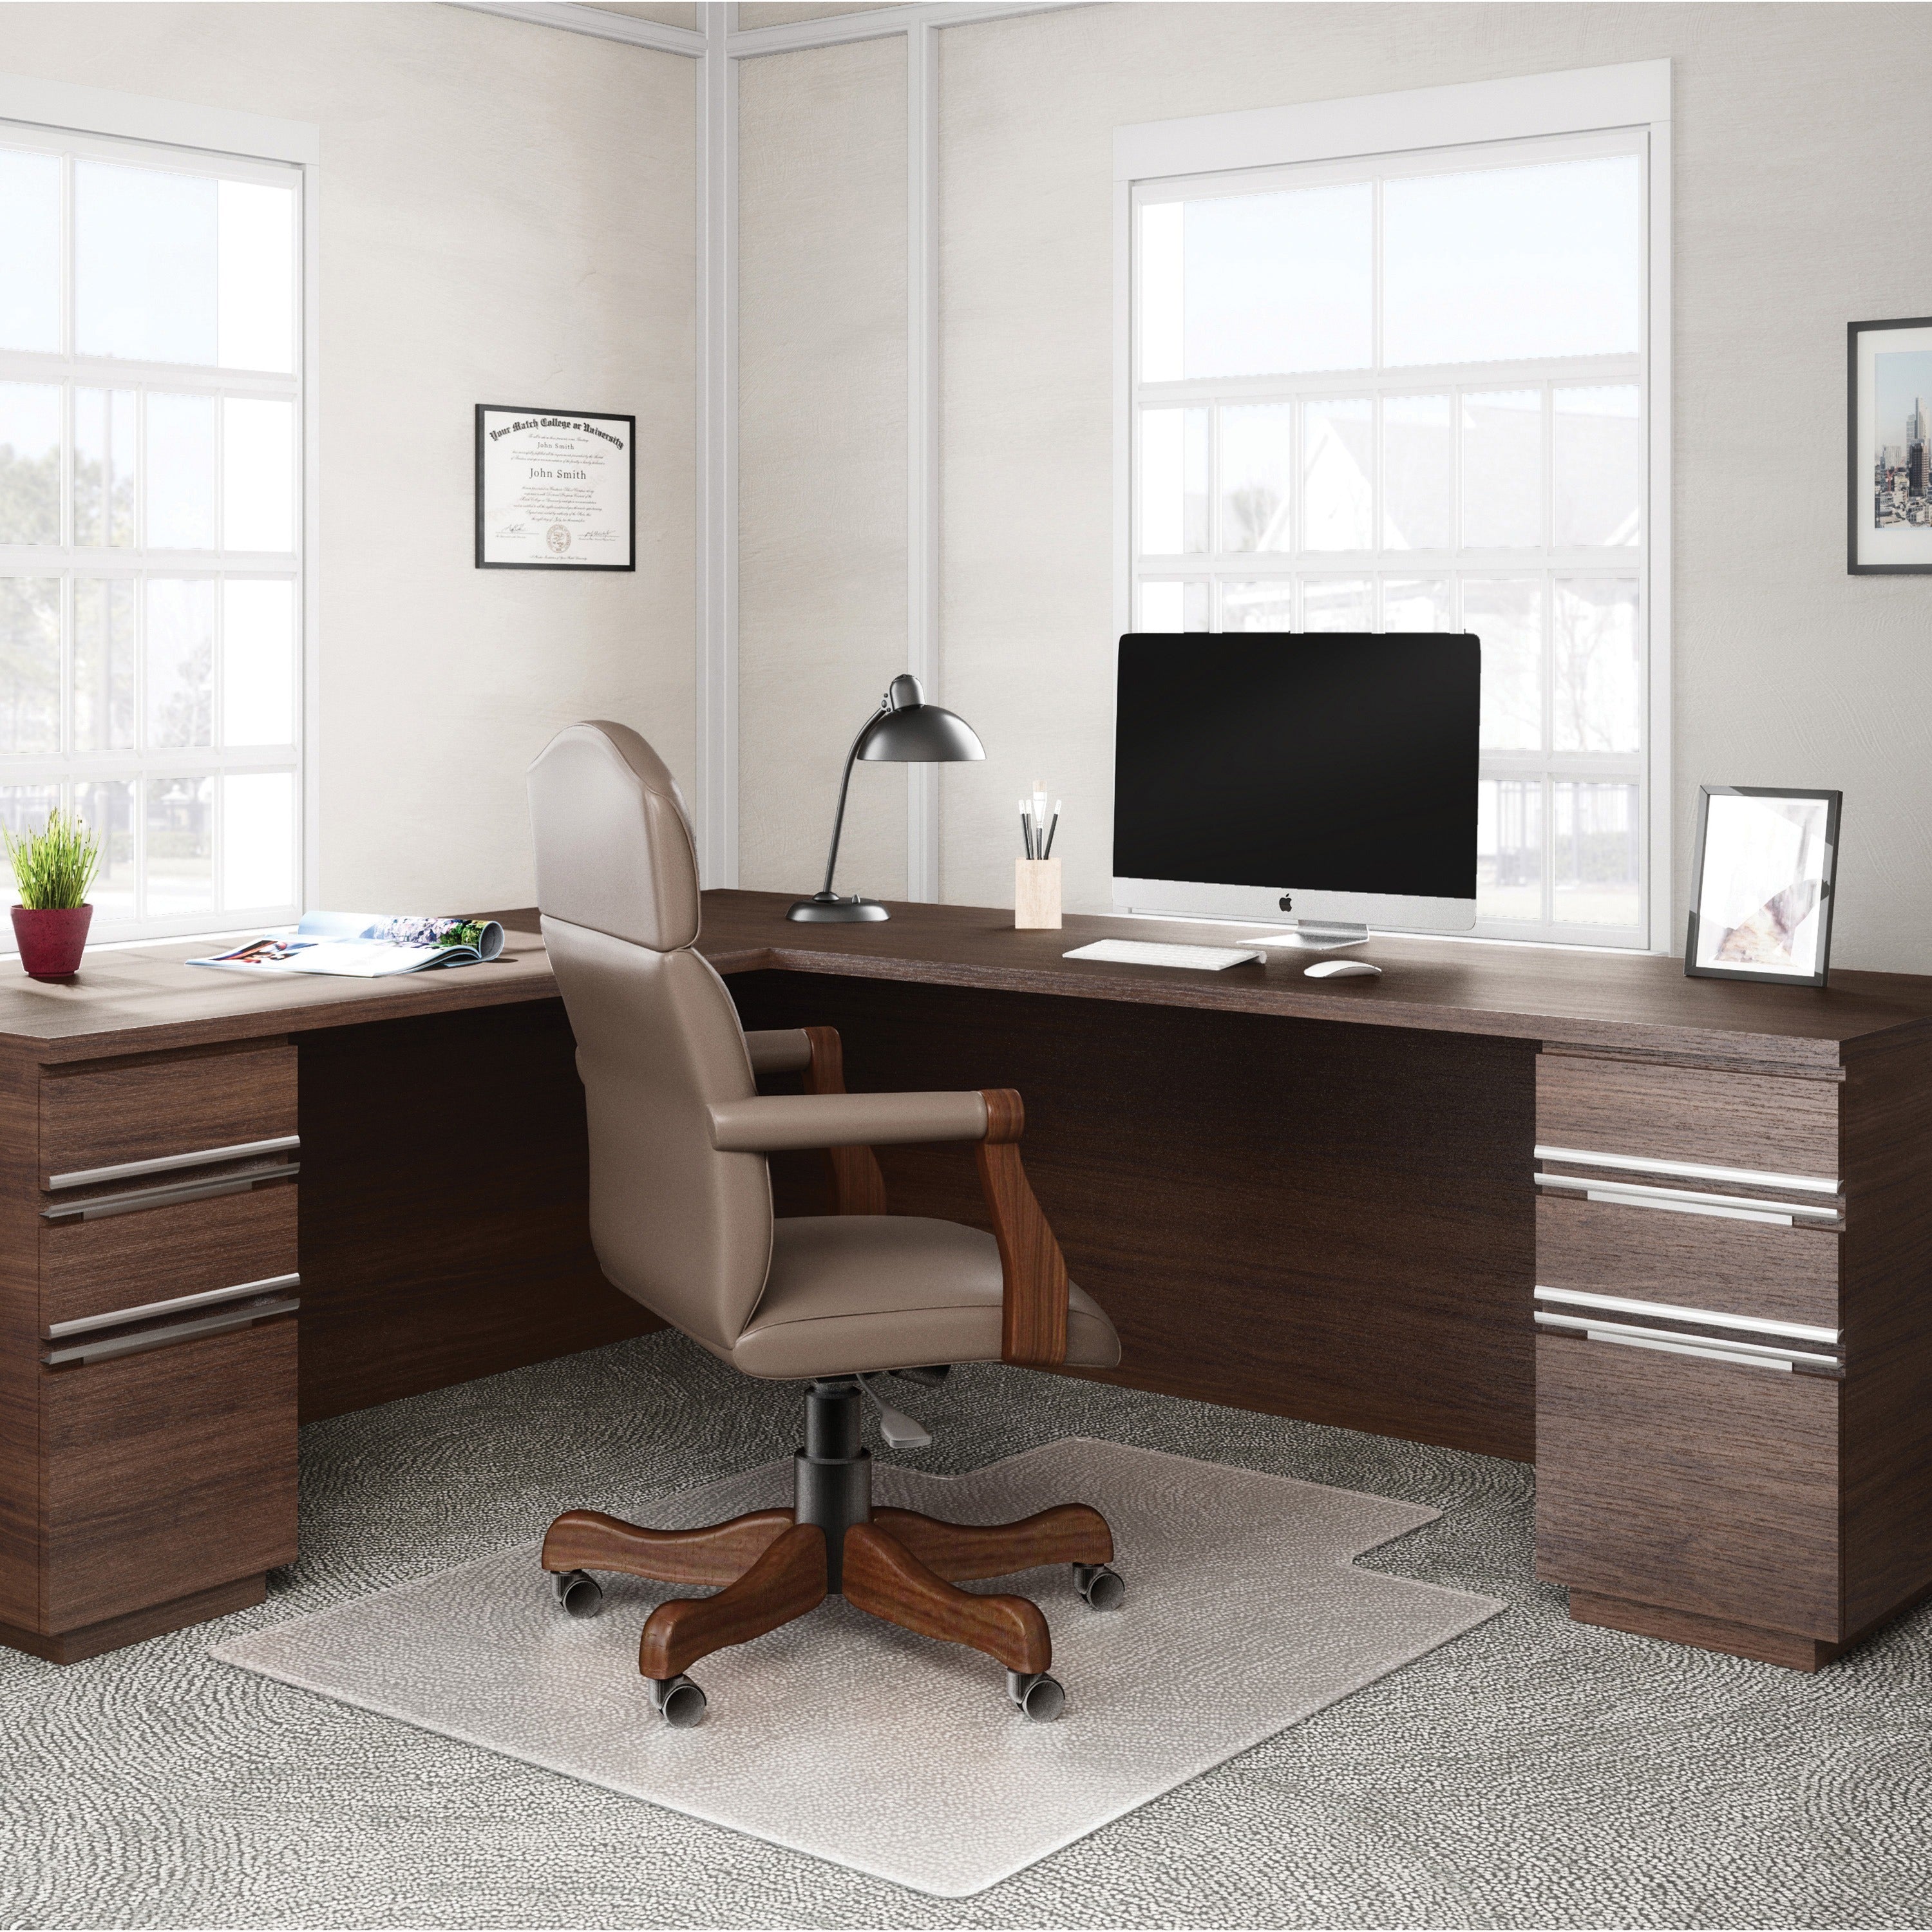 deflecto-rollamat-for-carpet-home-office-carpet-60-length-x-46-width-lip-size-12-length-x-25-width-rectangular-textured-vinyl-clear-1each_defcm15433f - 1